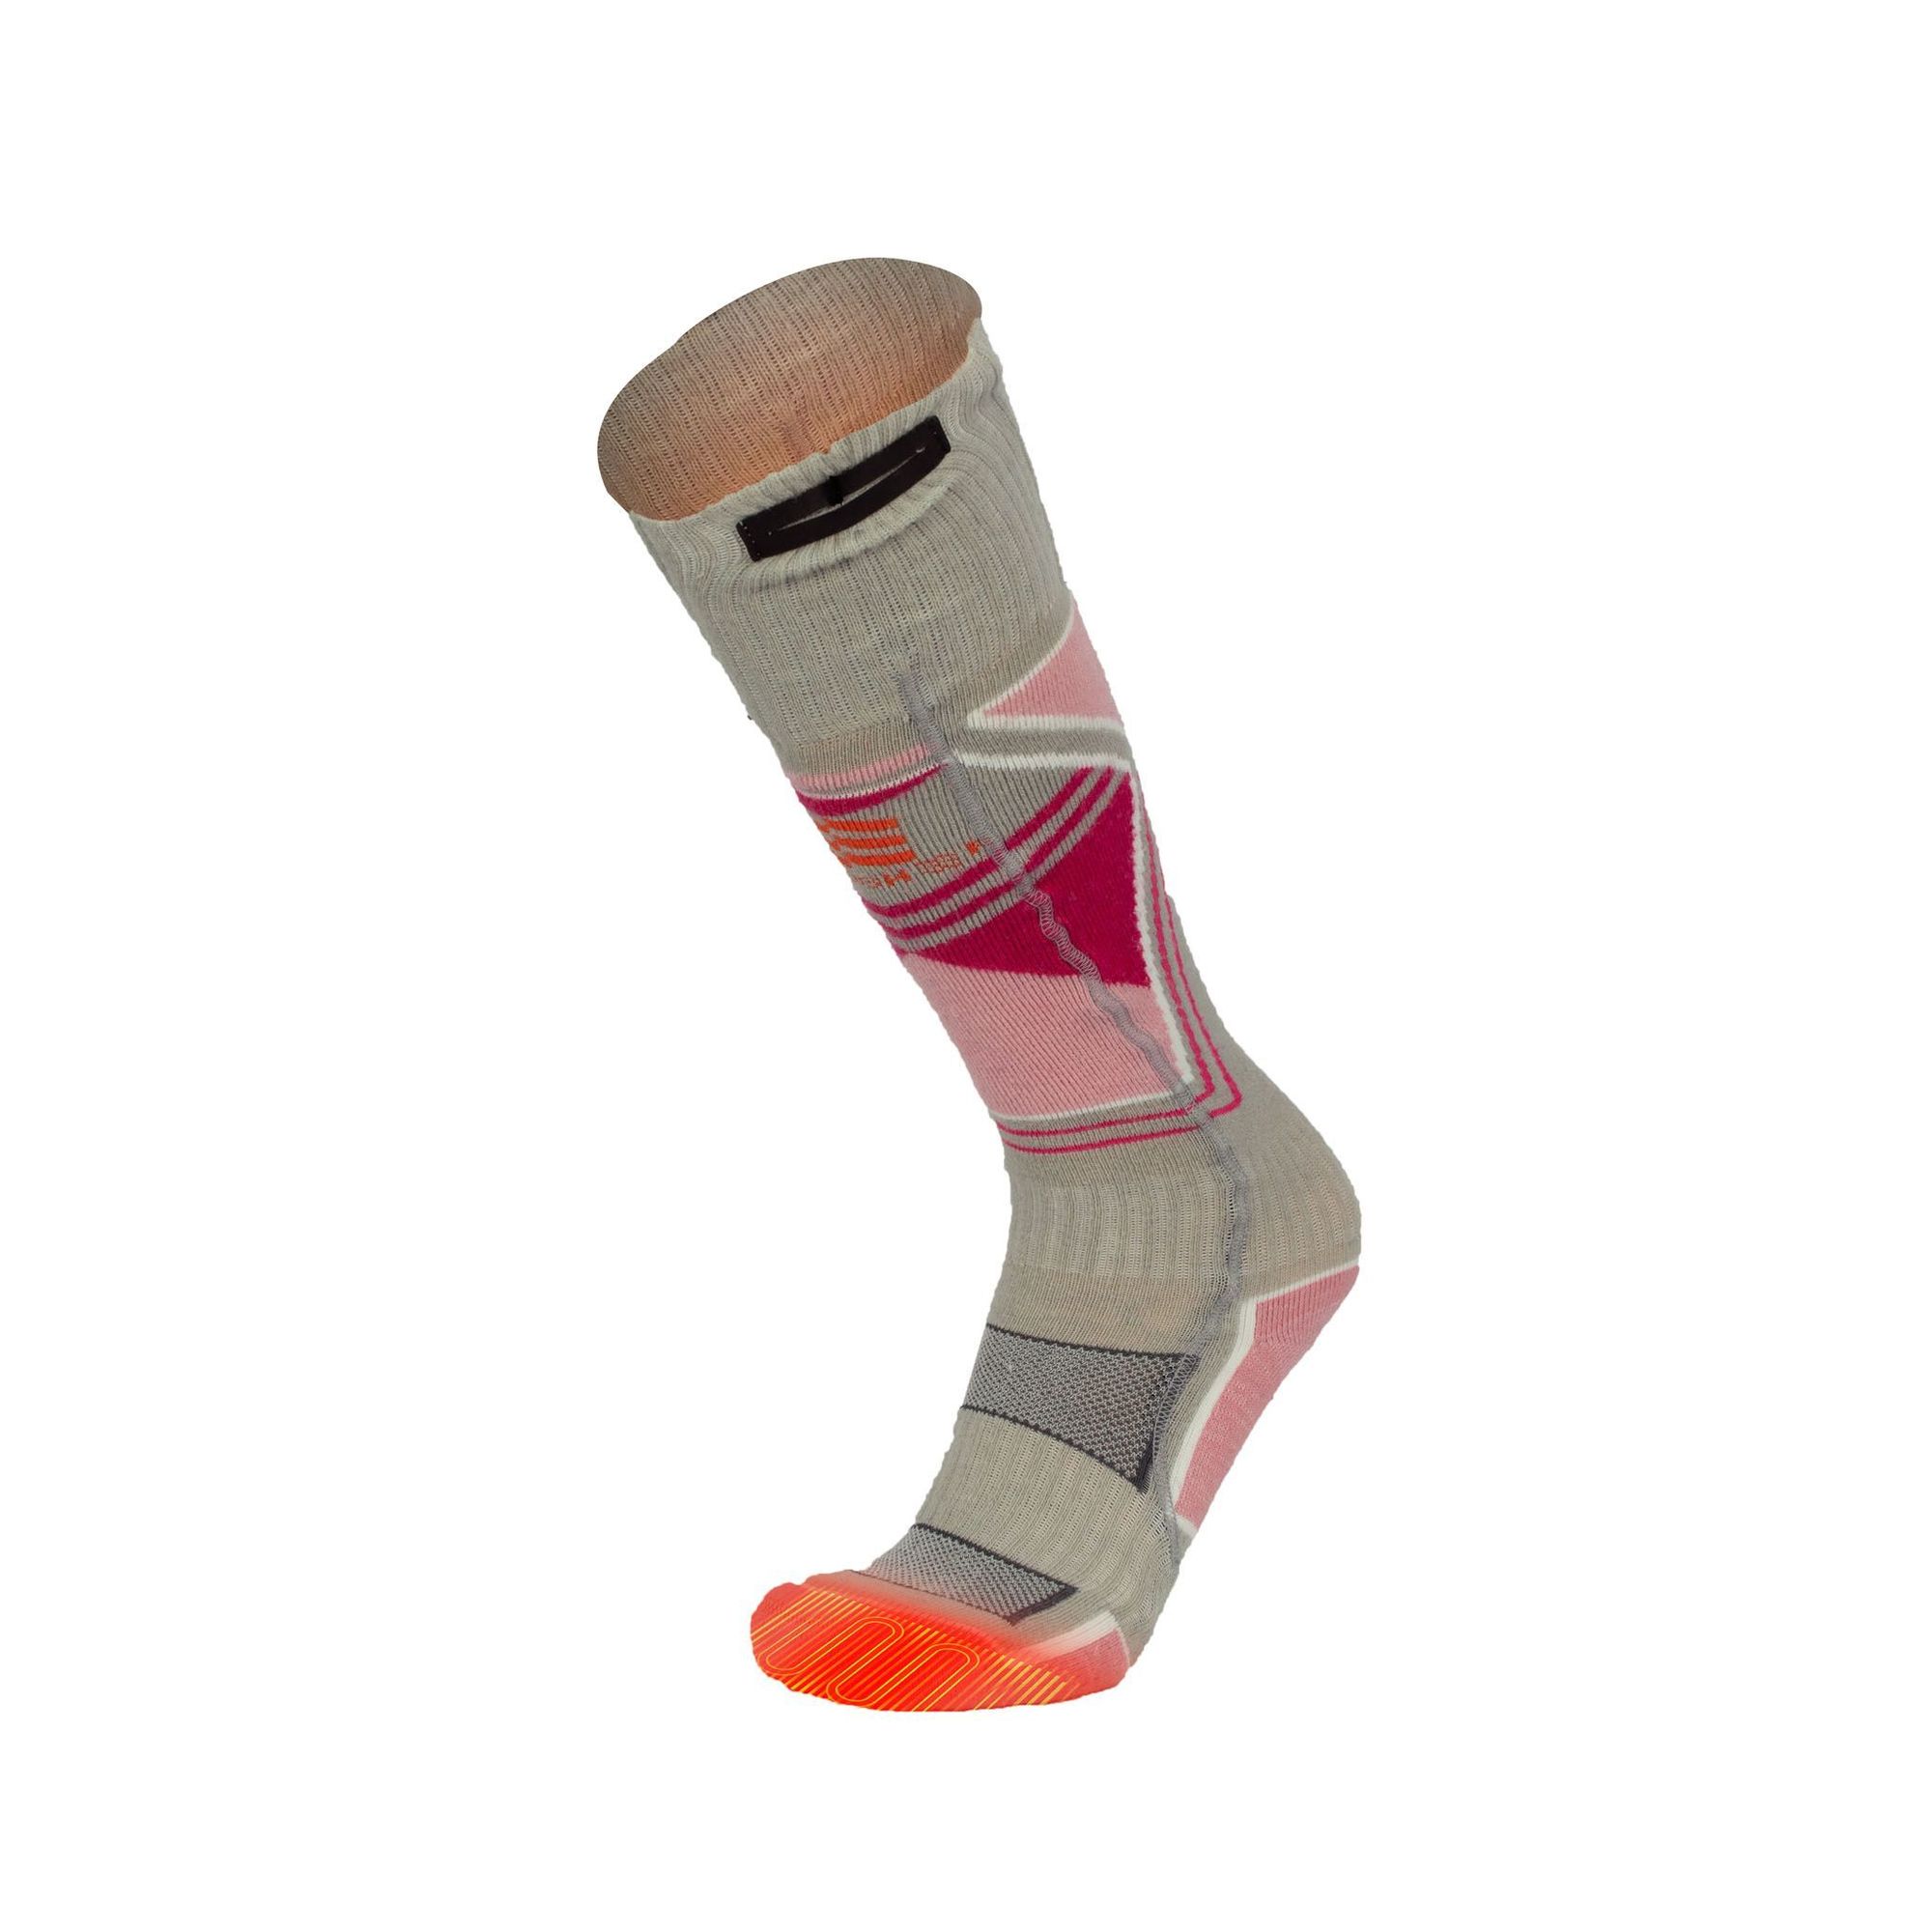 Fieldsheer, Premium Merino Heated Socks | Women's | PNK | MD, Size M, Pairs (qty.) 1 Color Pink, Model MWWS07010321